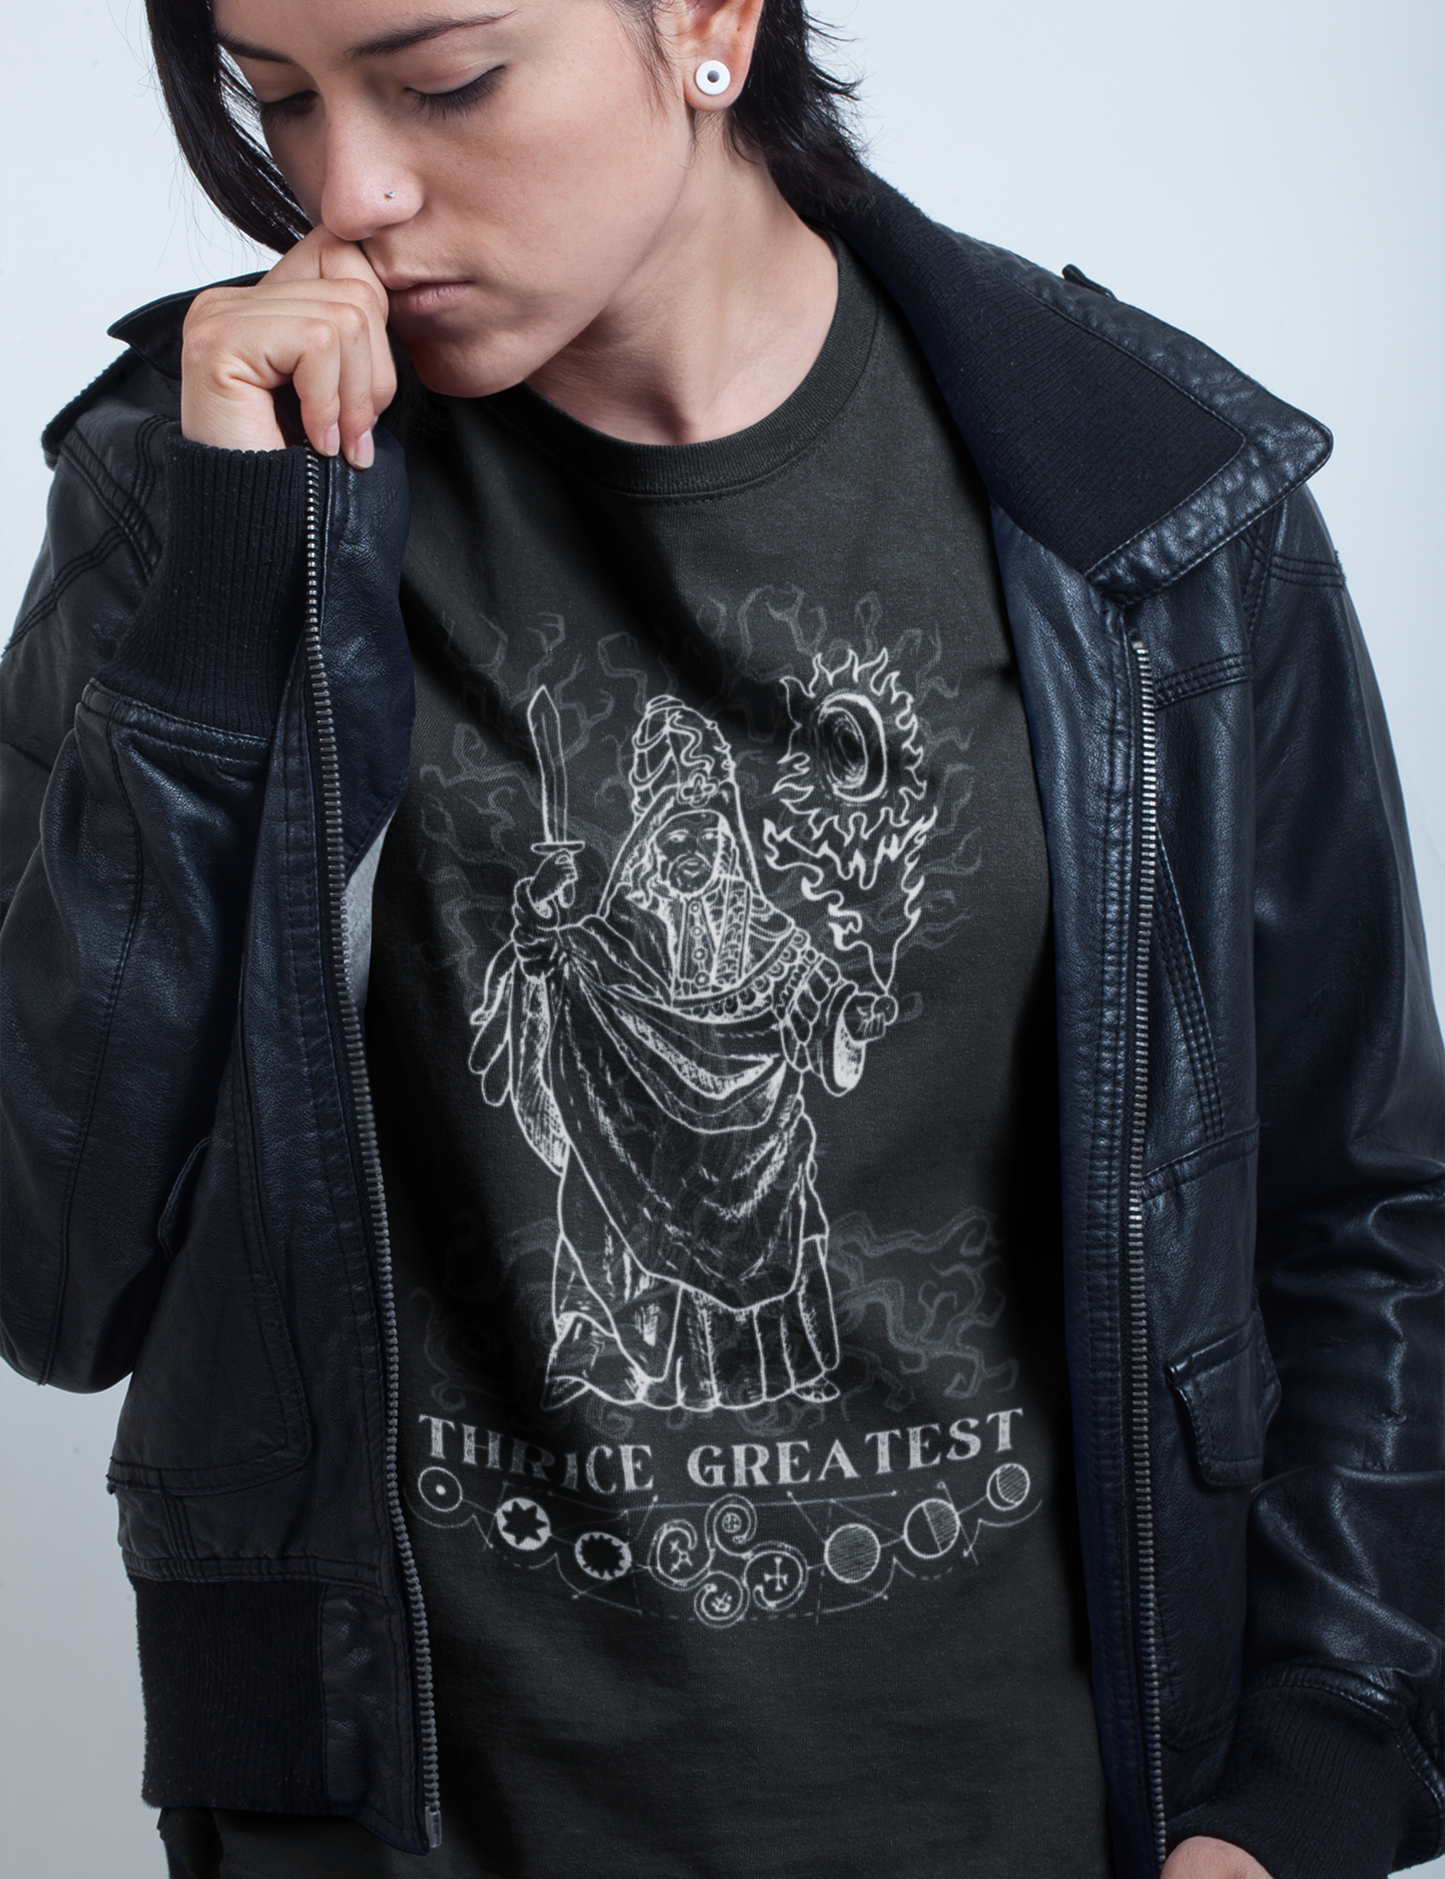 Hermes Thrice Greatest Occult Esoteric Shirt